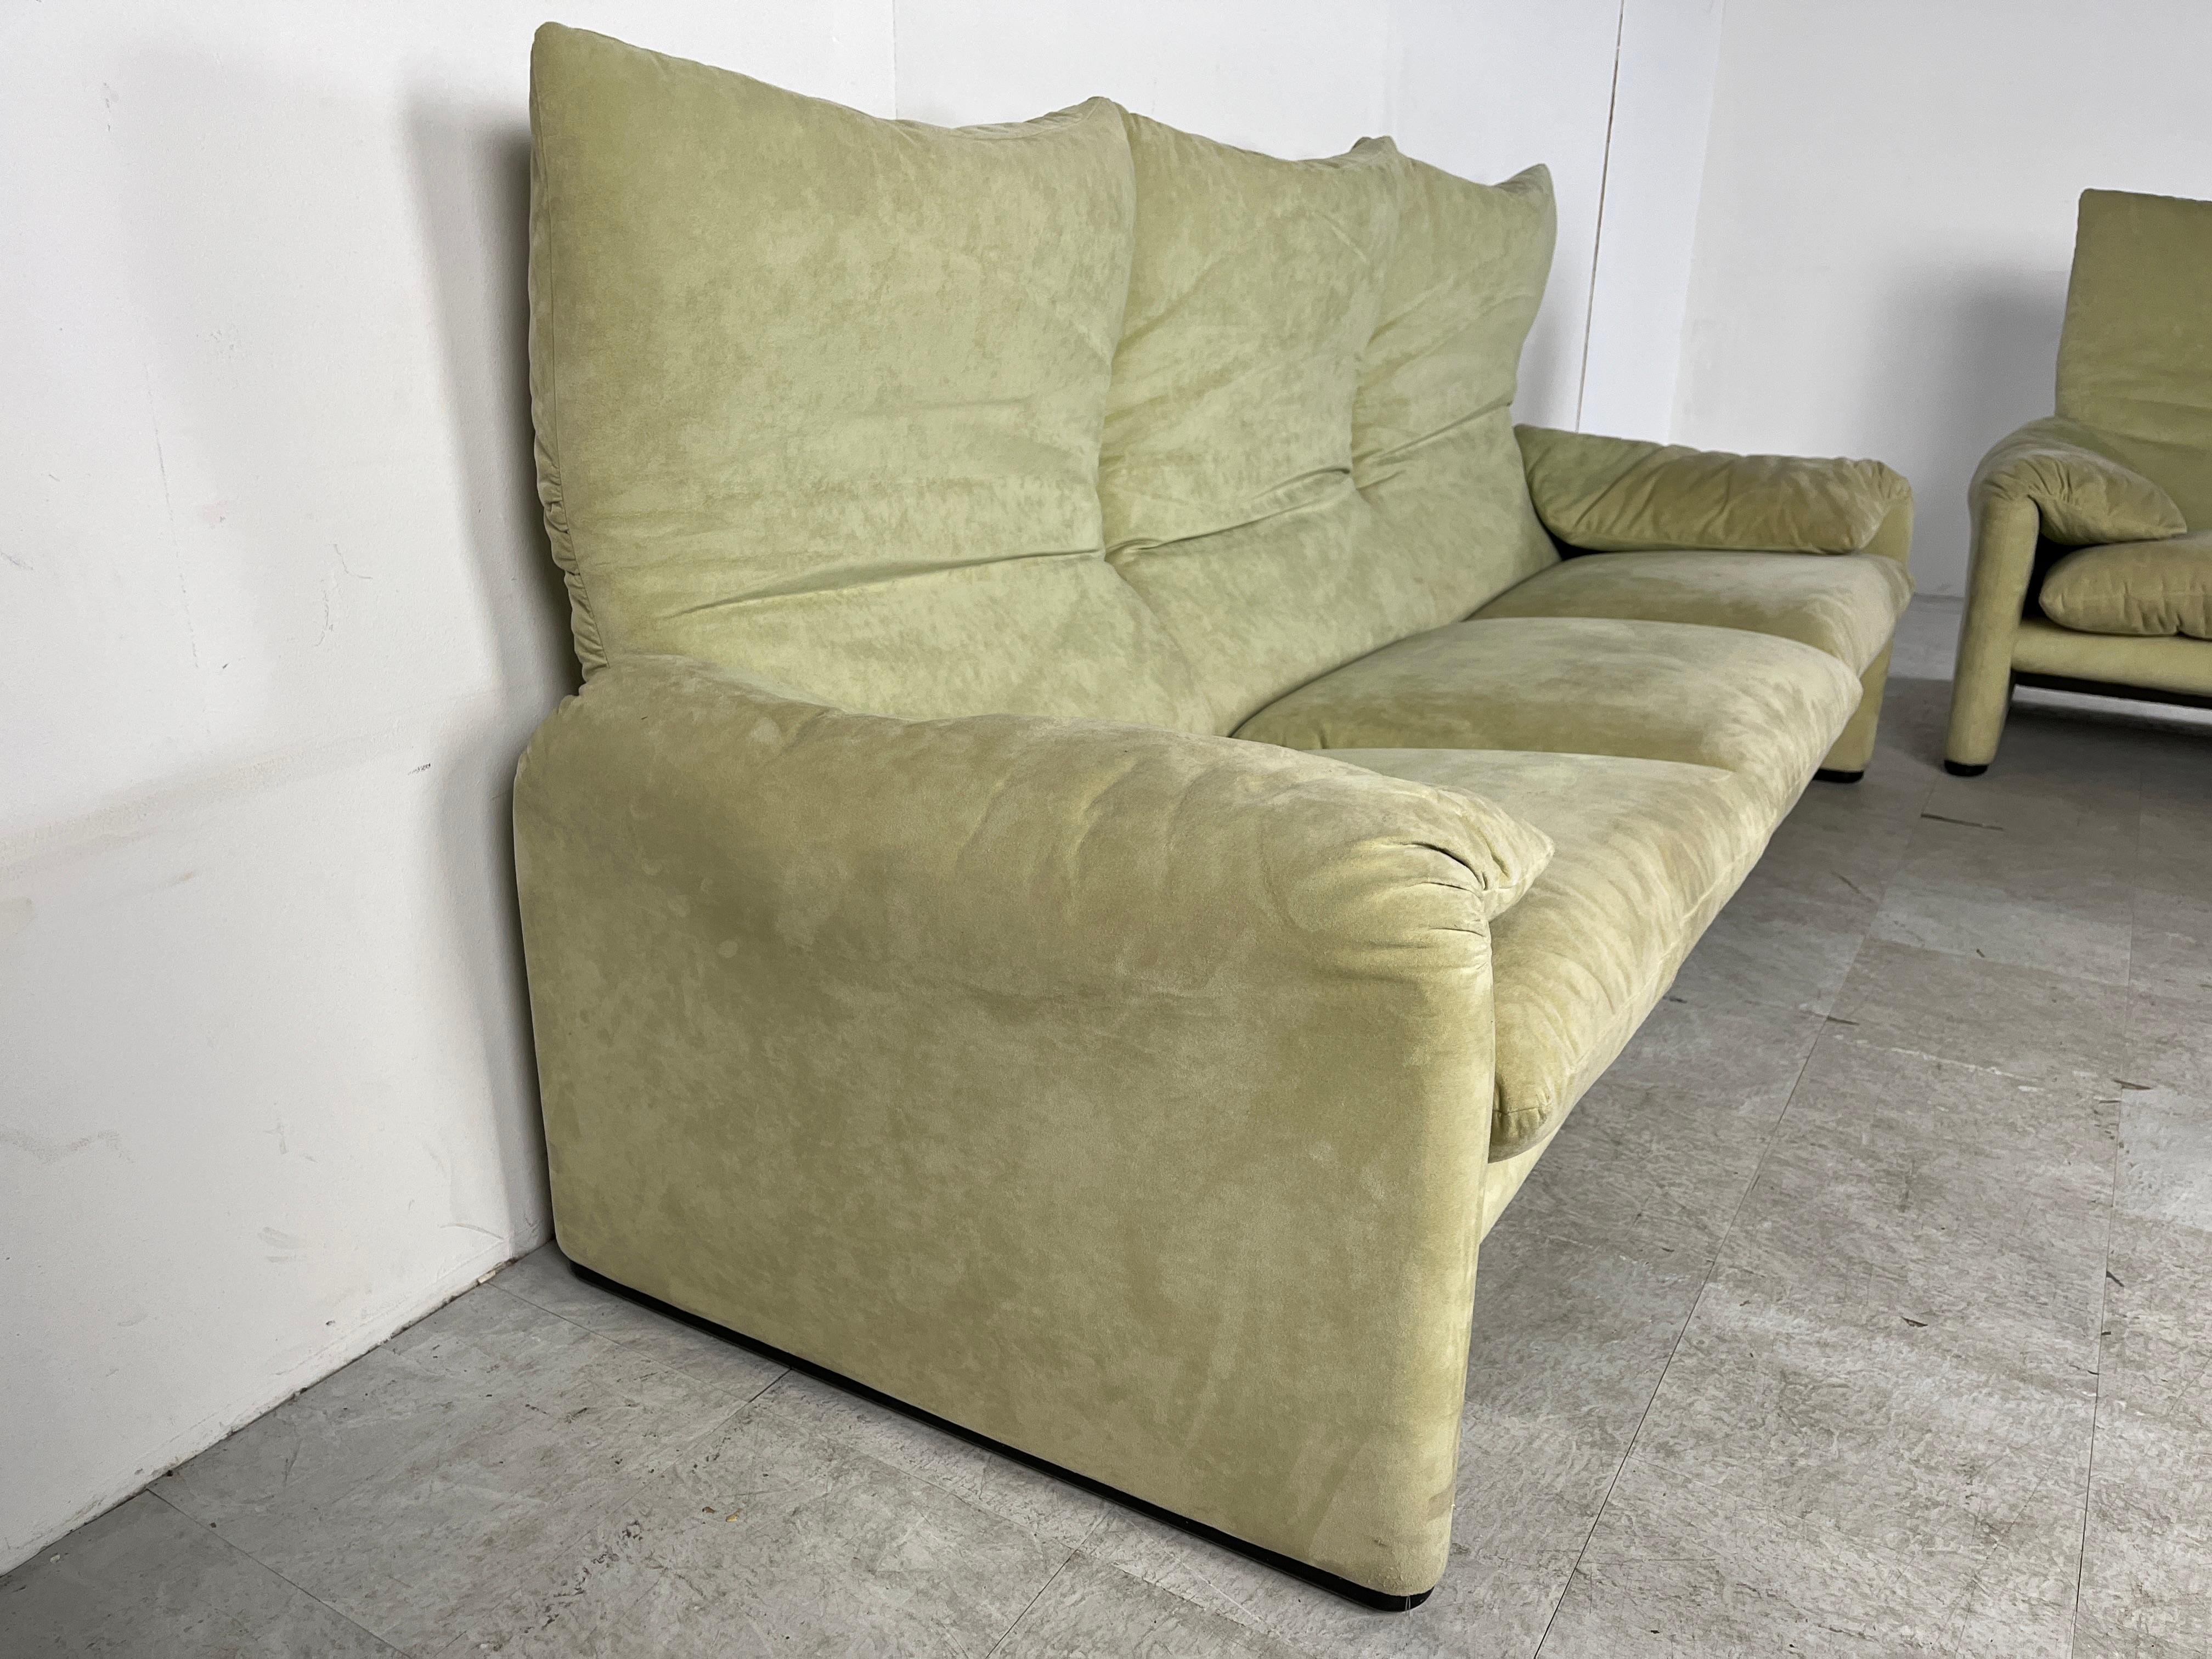 Suede Maralunga sofa set by Vico Magistretti for Cassina